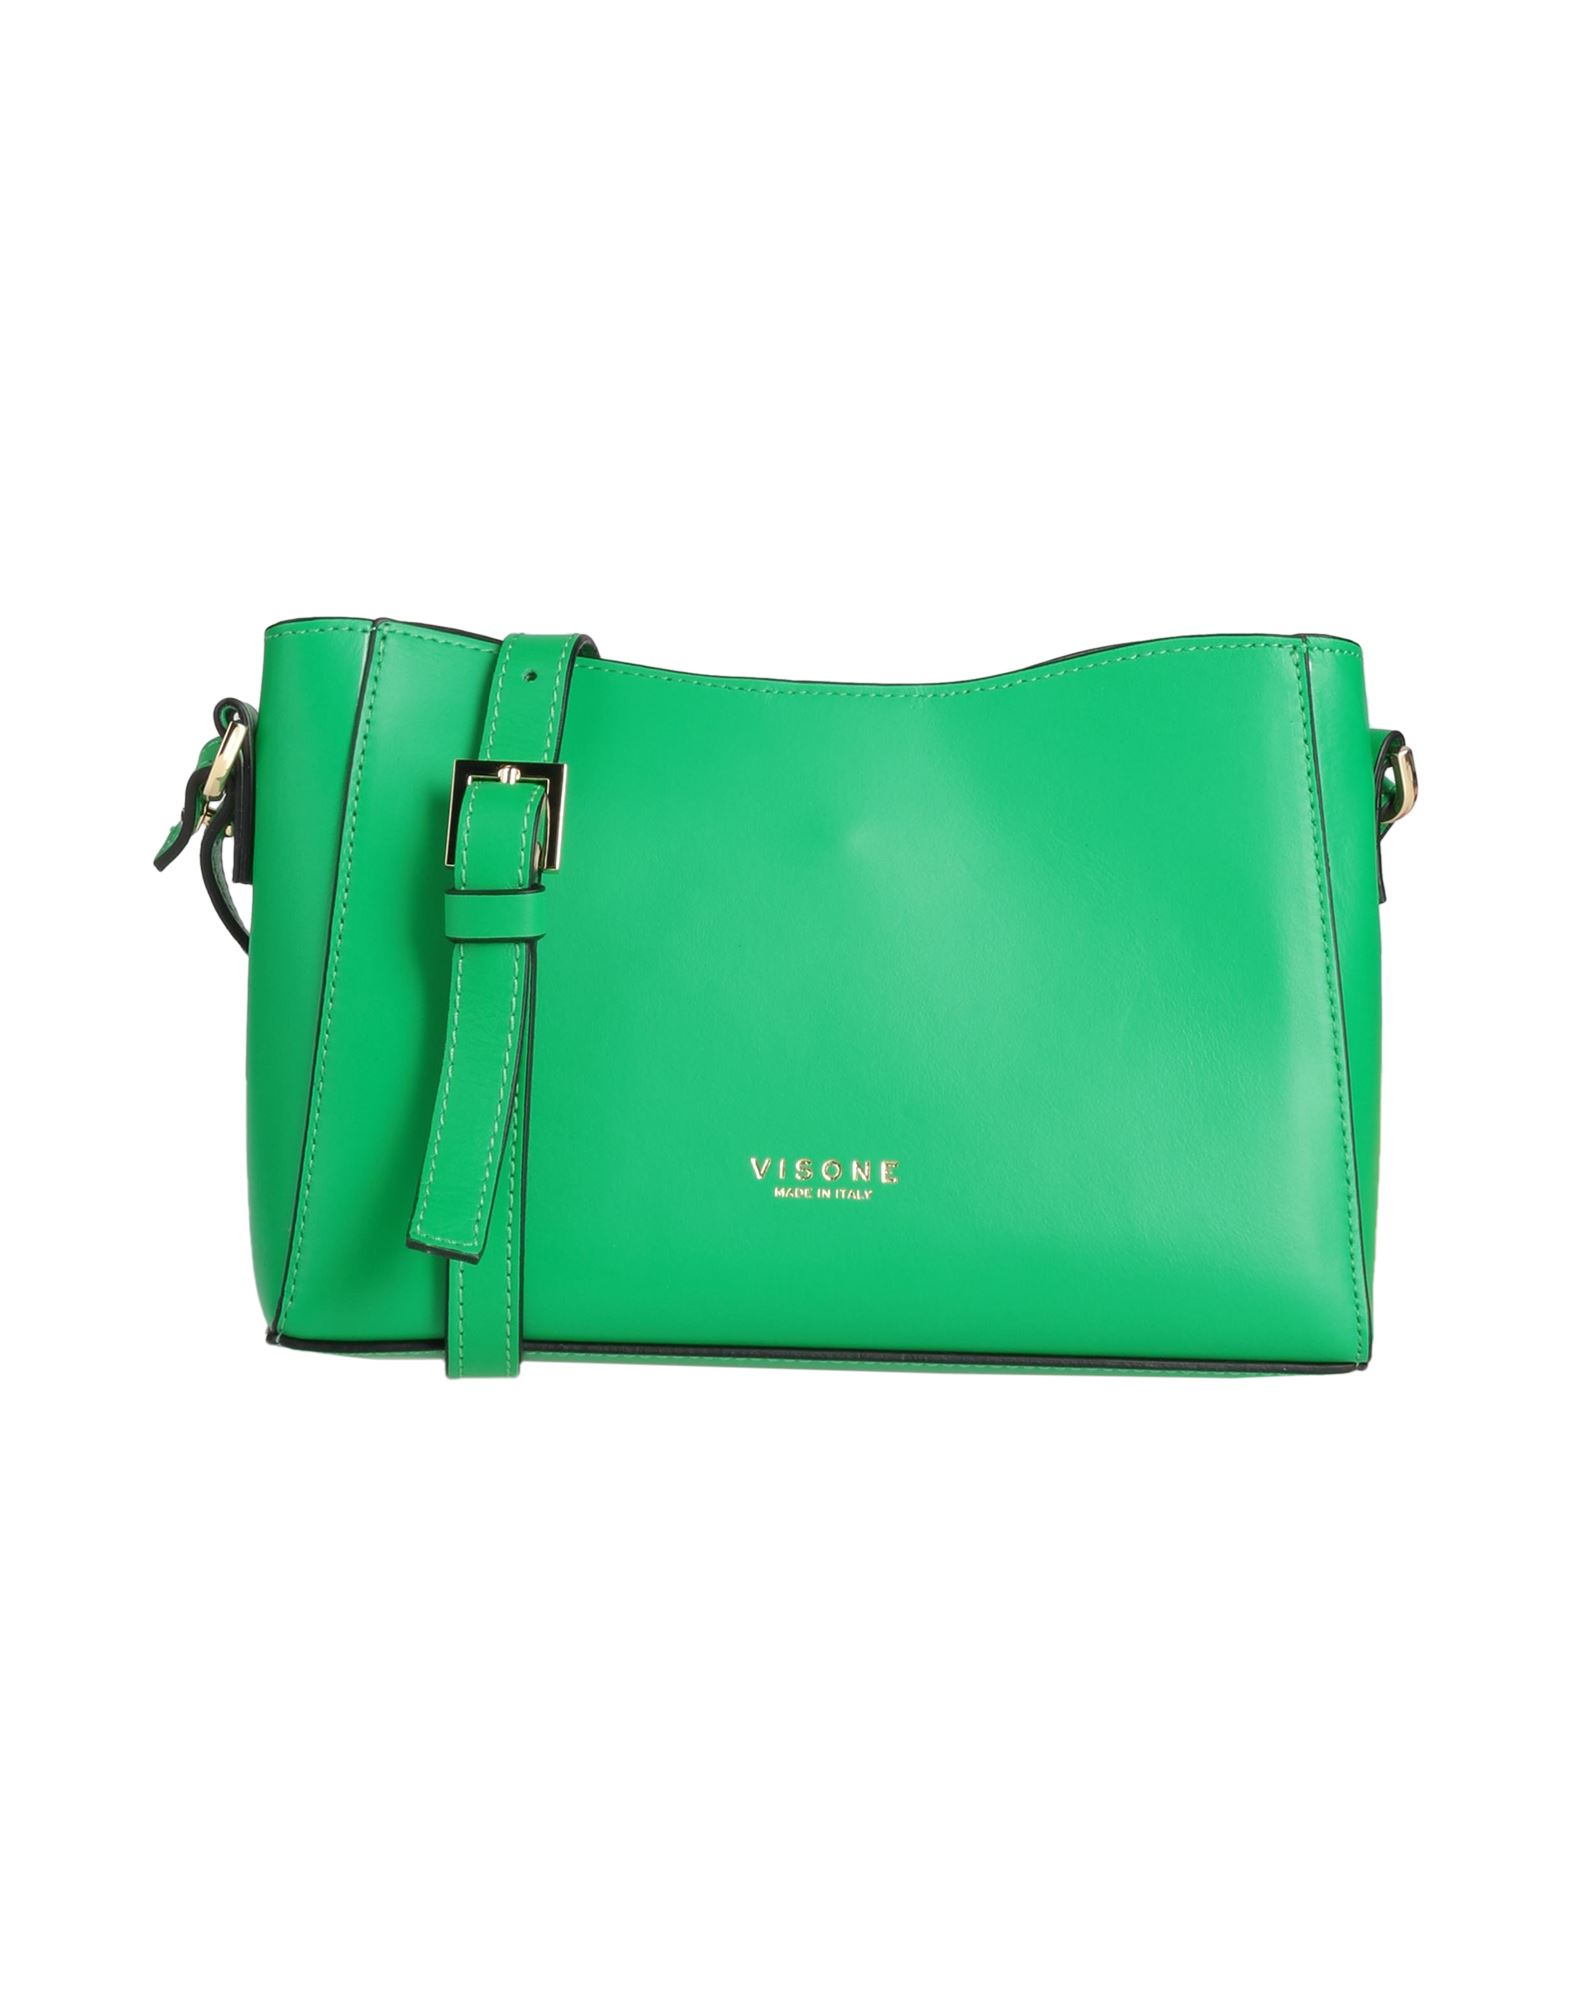 Visone Handbags In Green